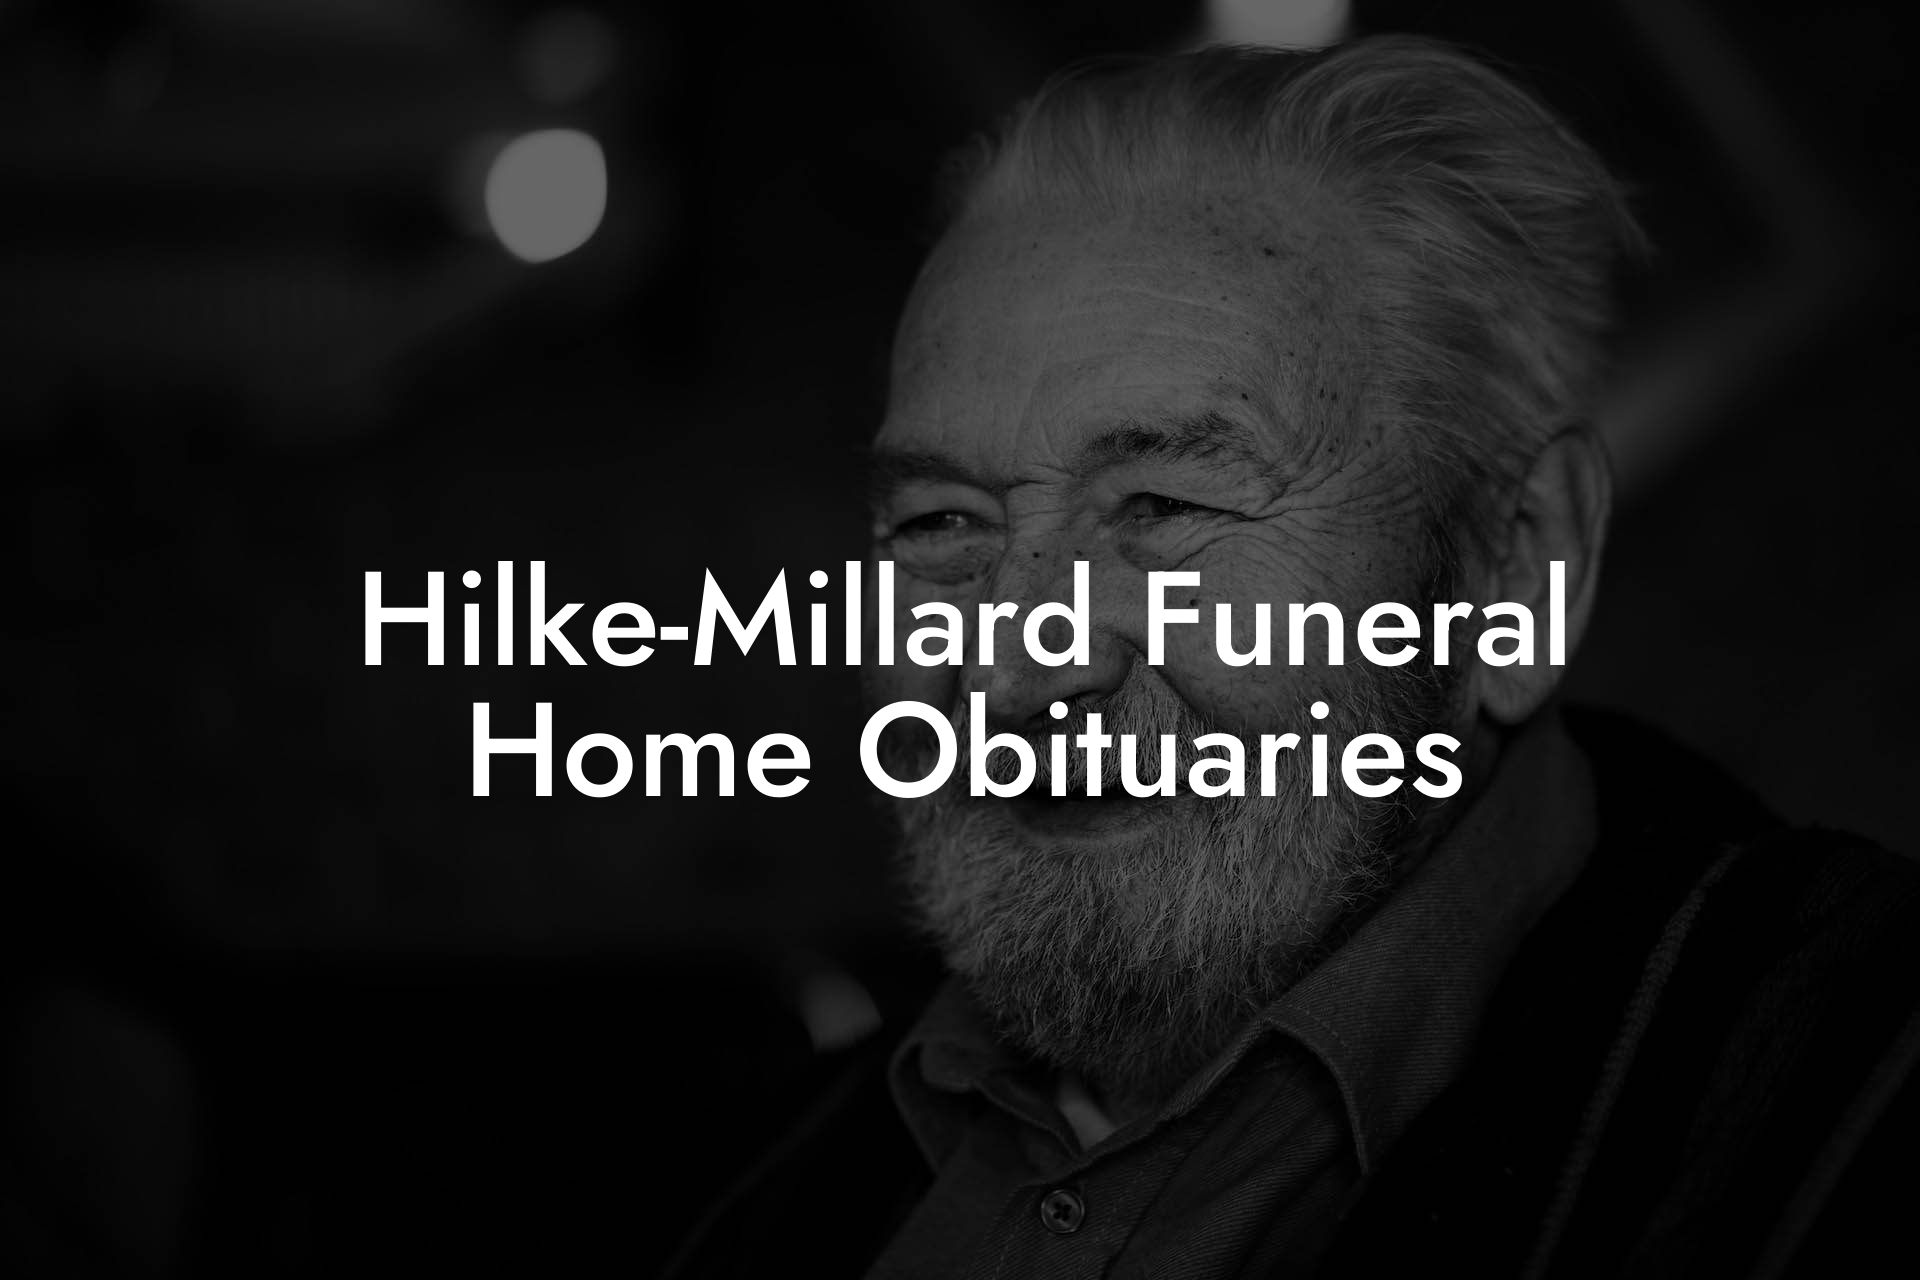 Hilke-Millard Funeral Home Obituaries